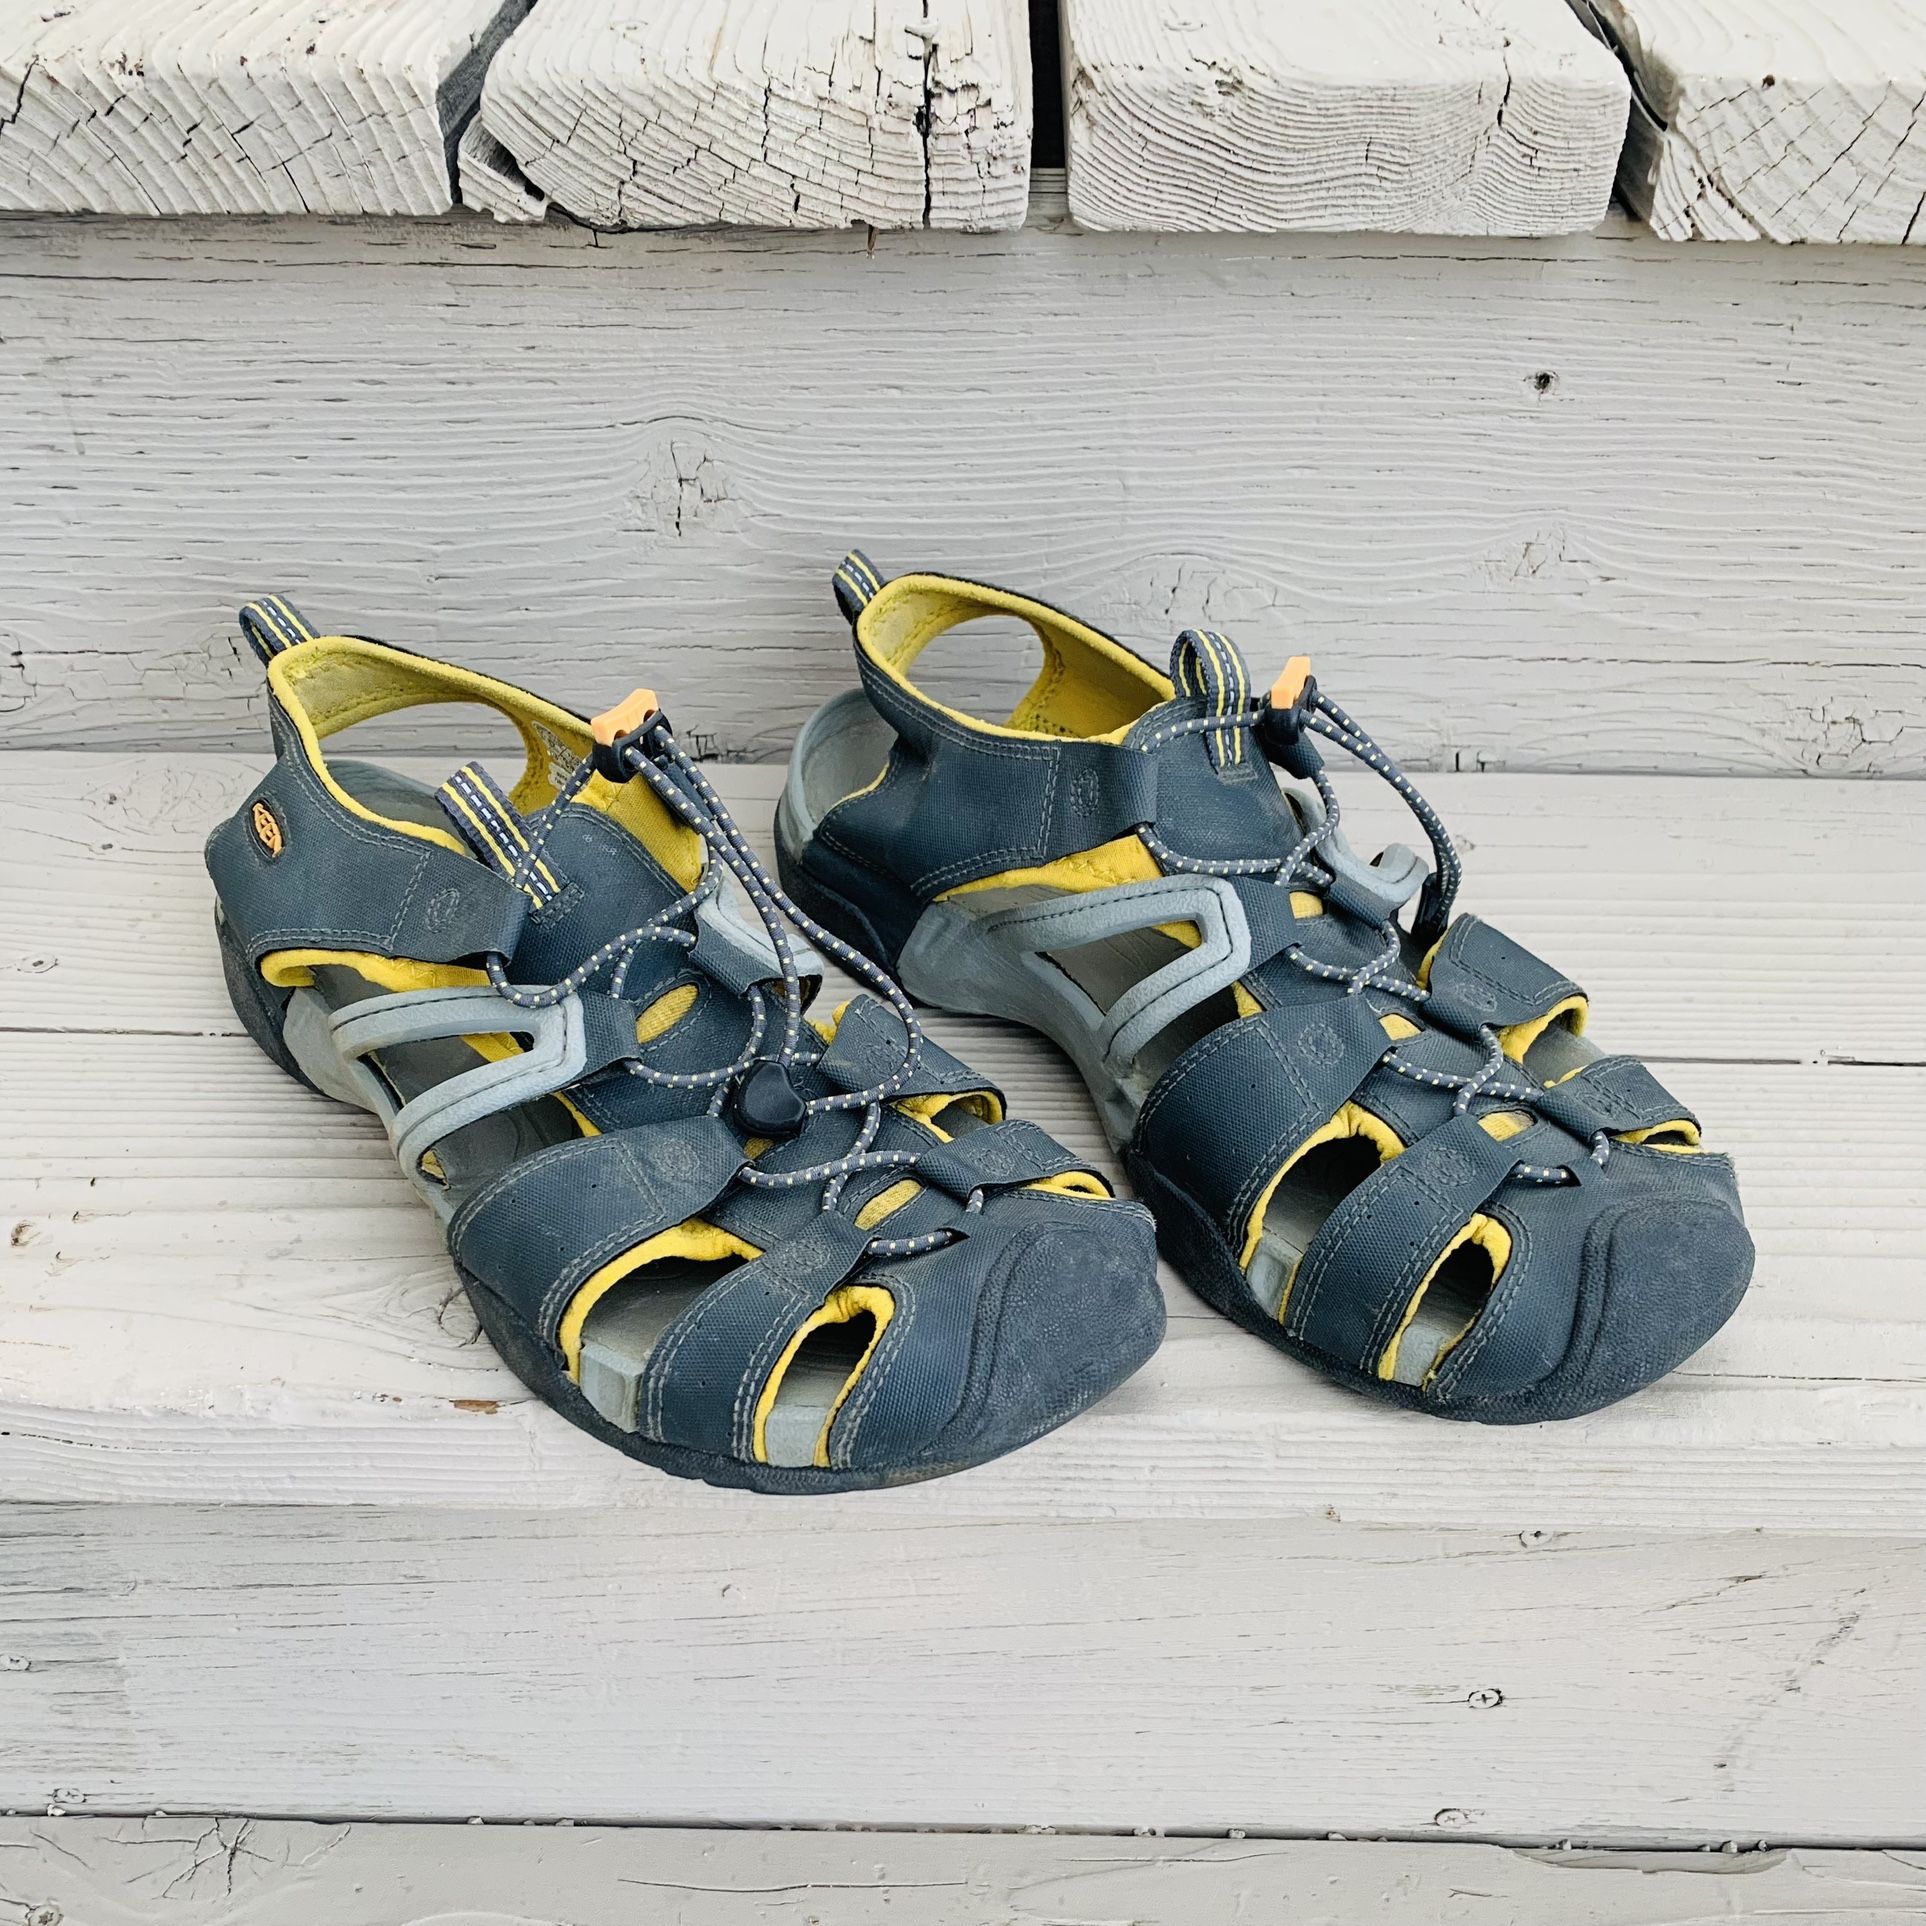 Keen Waterproof Hiking Sport Sandals Shoes Men’s Size 11.5 Black Yellow